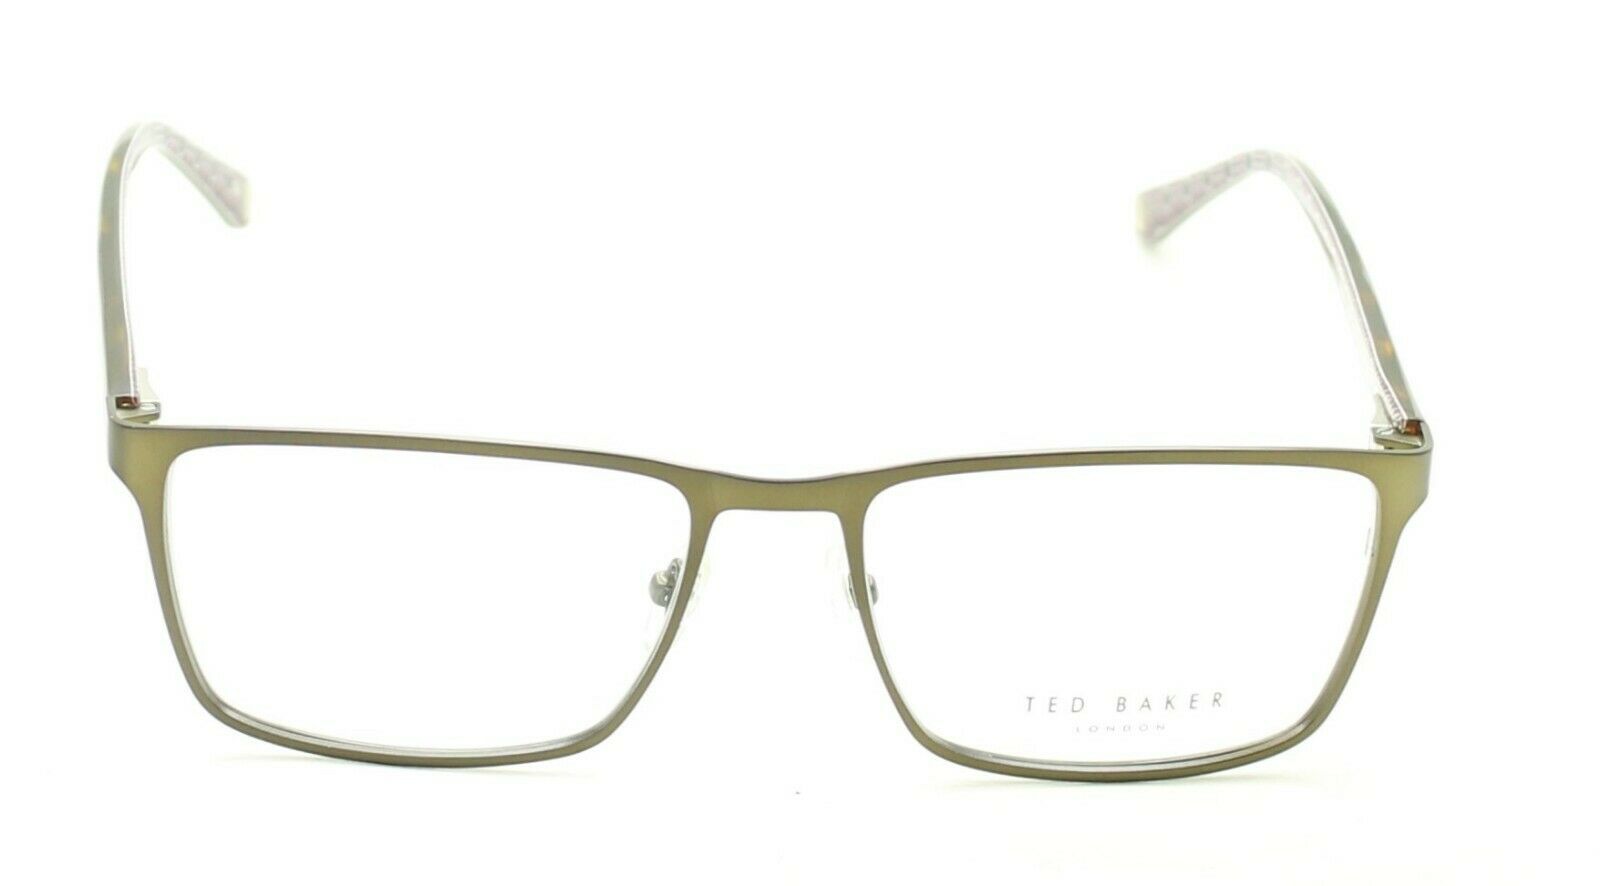 TED BAKER 4251 154 Reeve 55mm Eyewear FRAMES Glasses RX Optical Eyeglasses - New